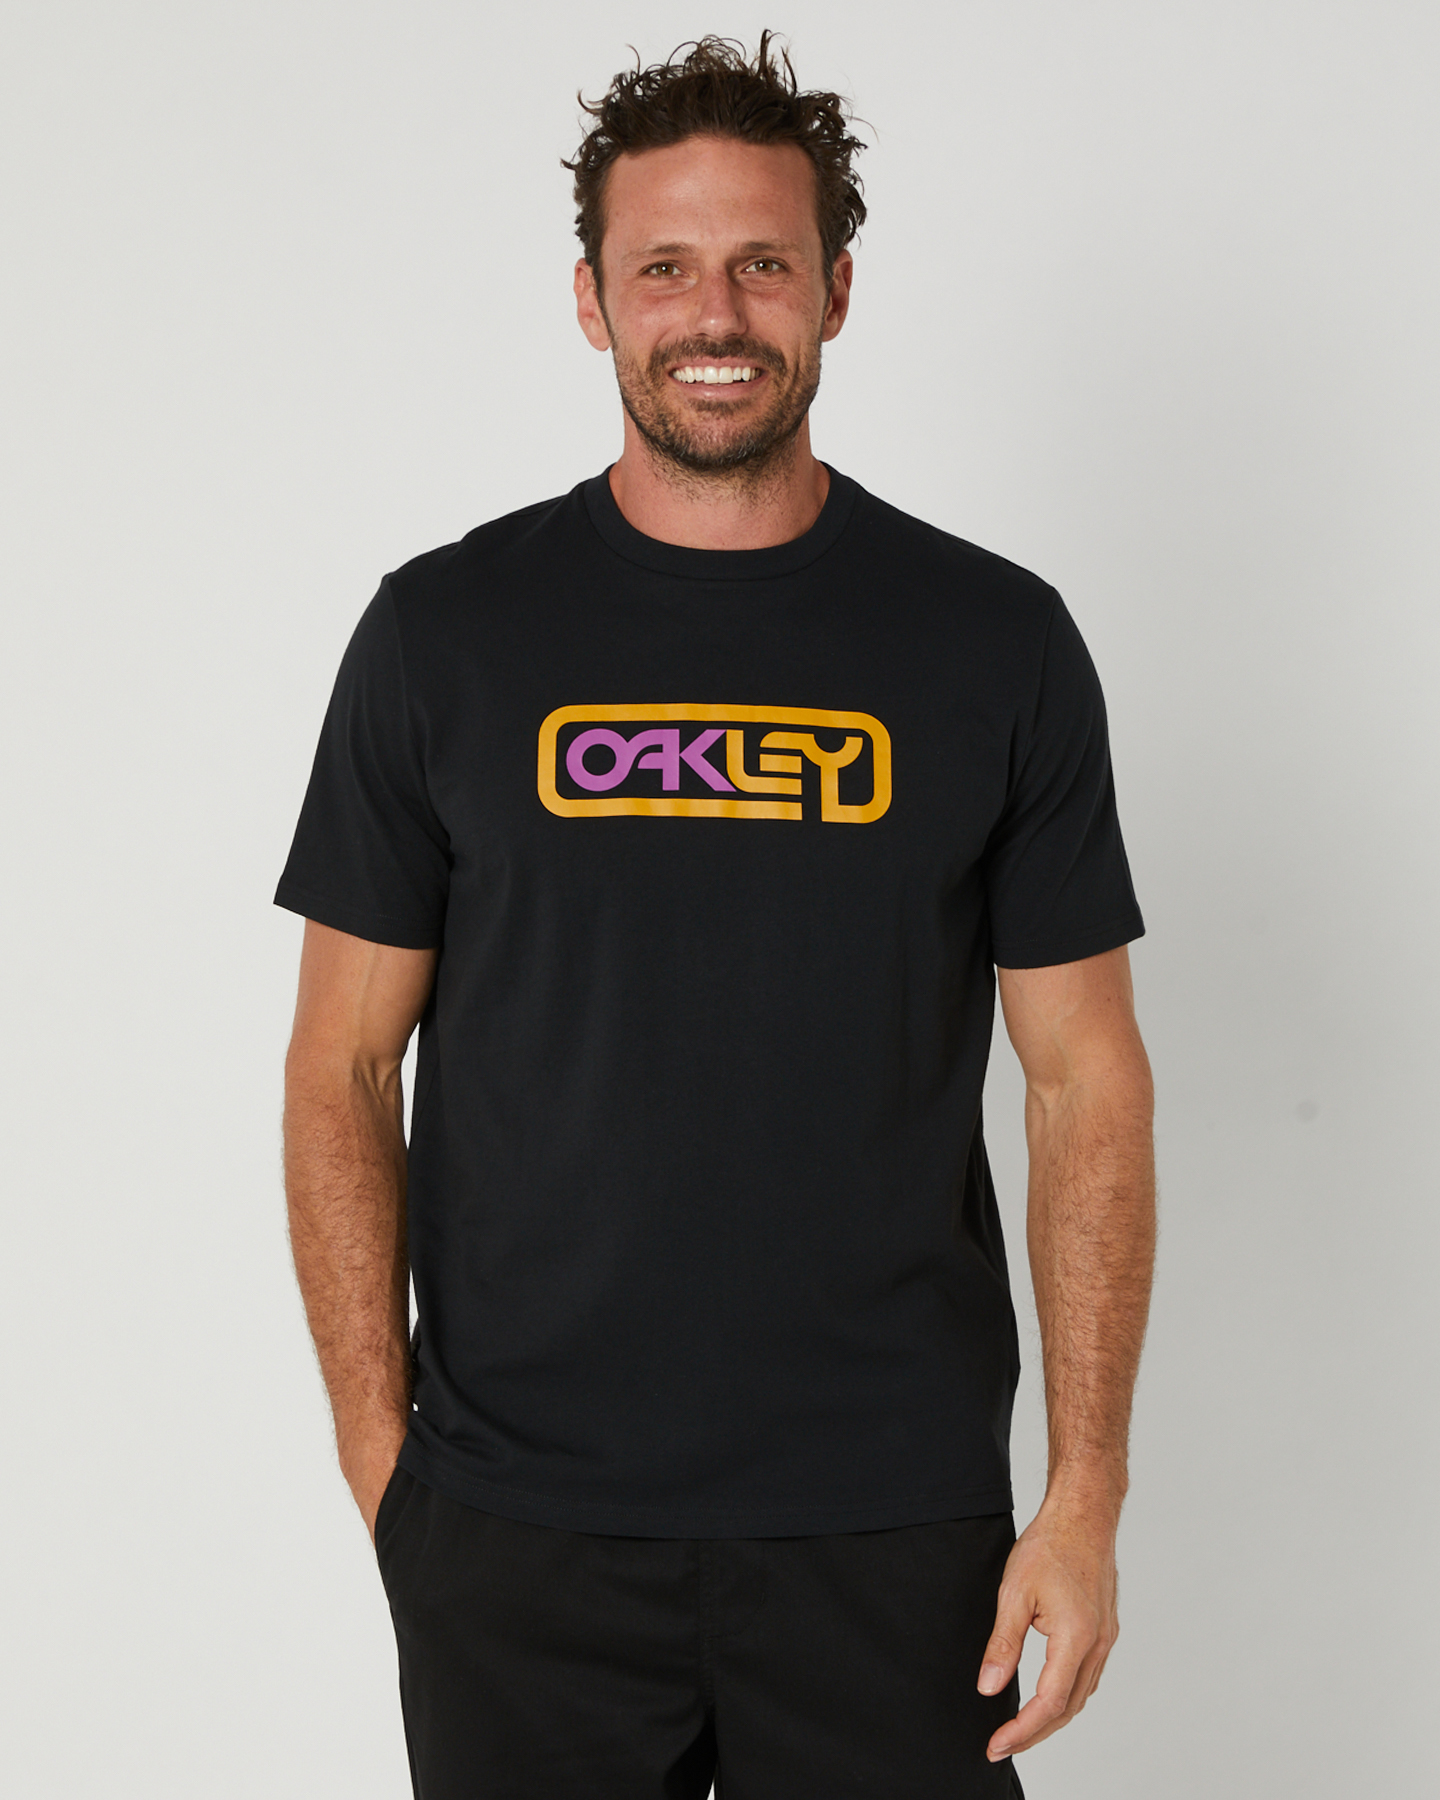 Oakley Camiseta Masc Mod Metal 2.0 T-Shirt Piet - Blackout